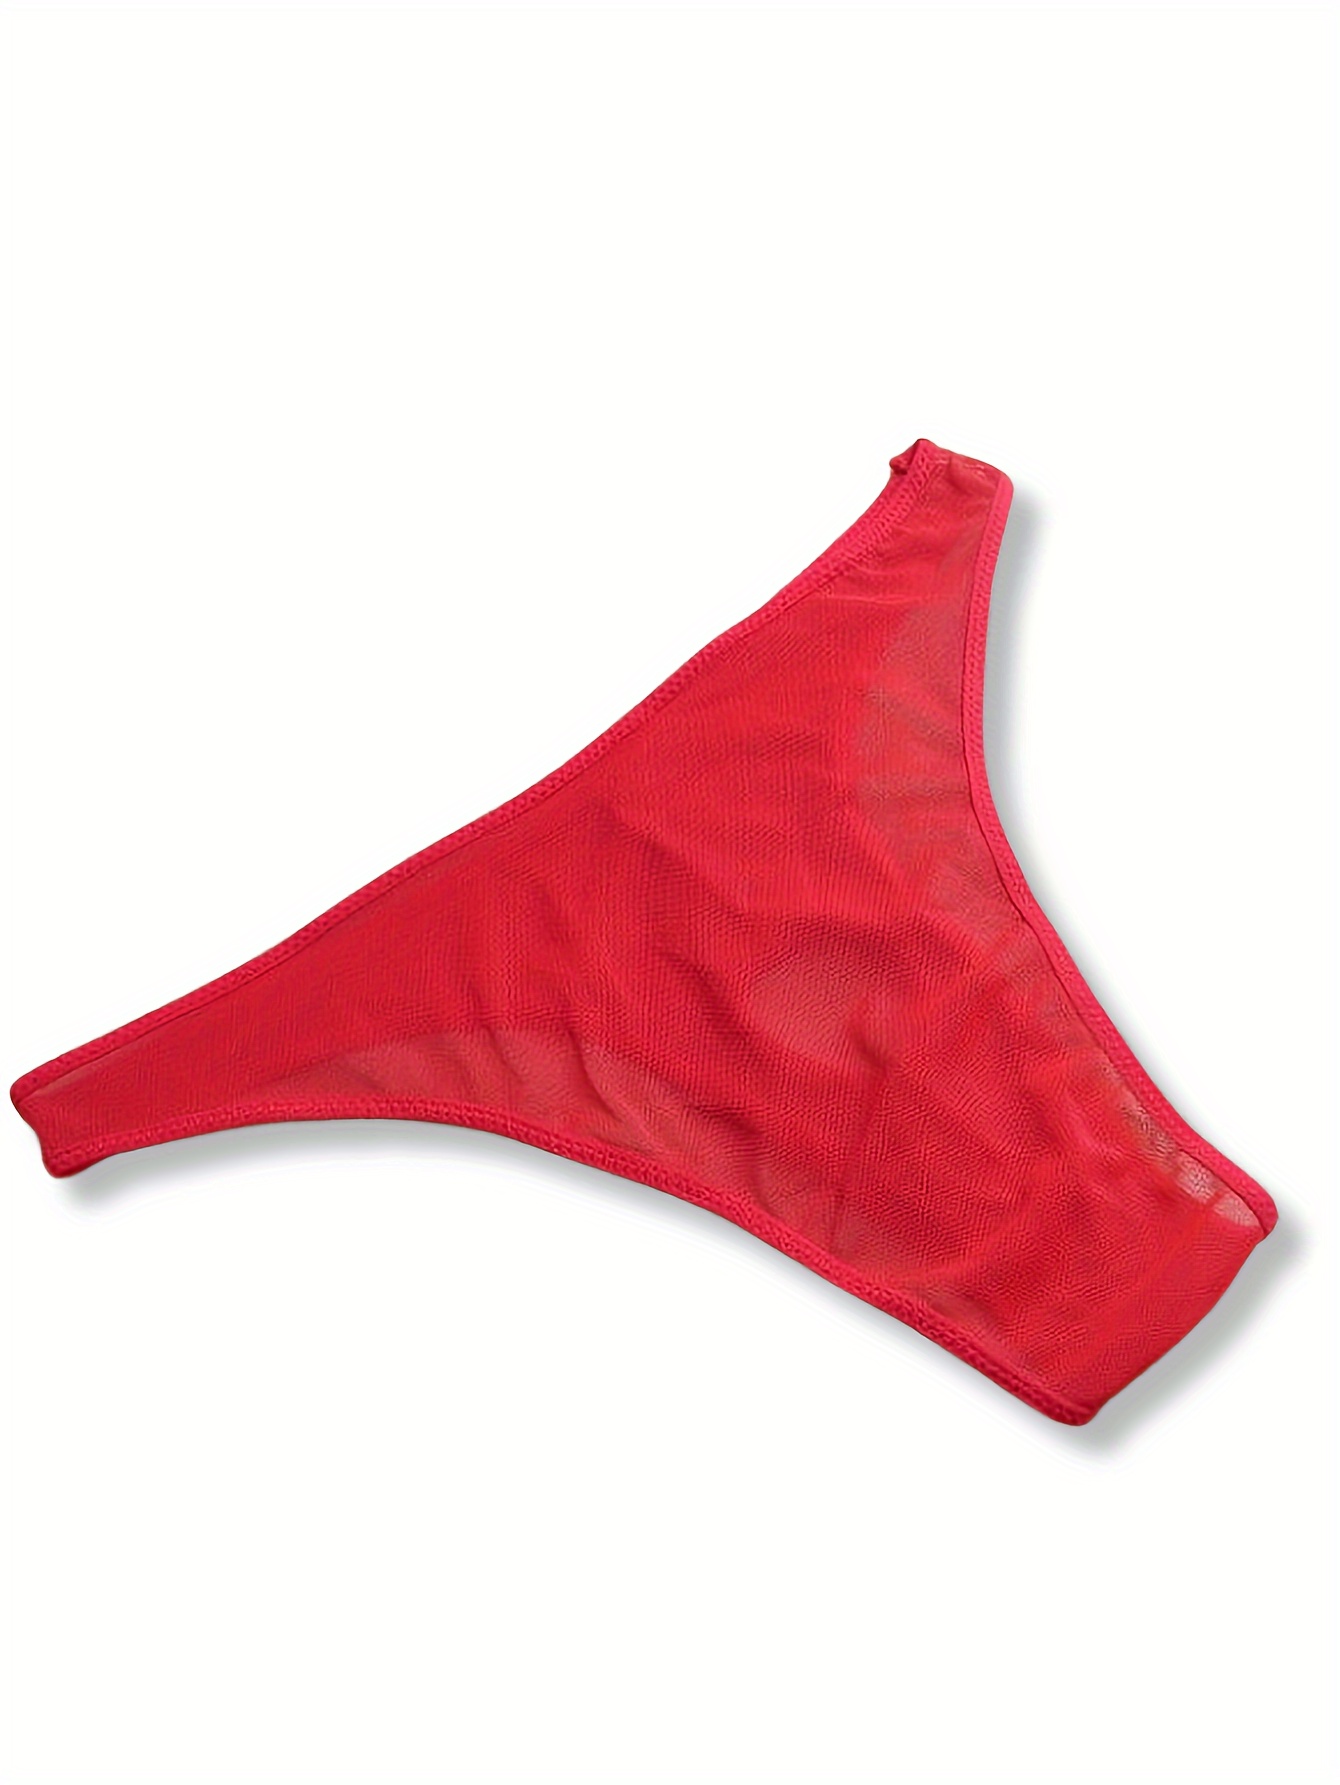 YiyiLai Men Soft Sheer Sexy Lingerie Underwear Mesh Holes Briefs